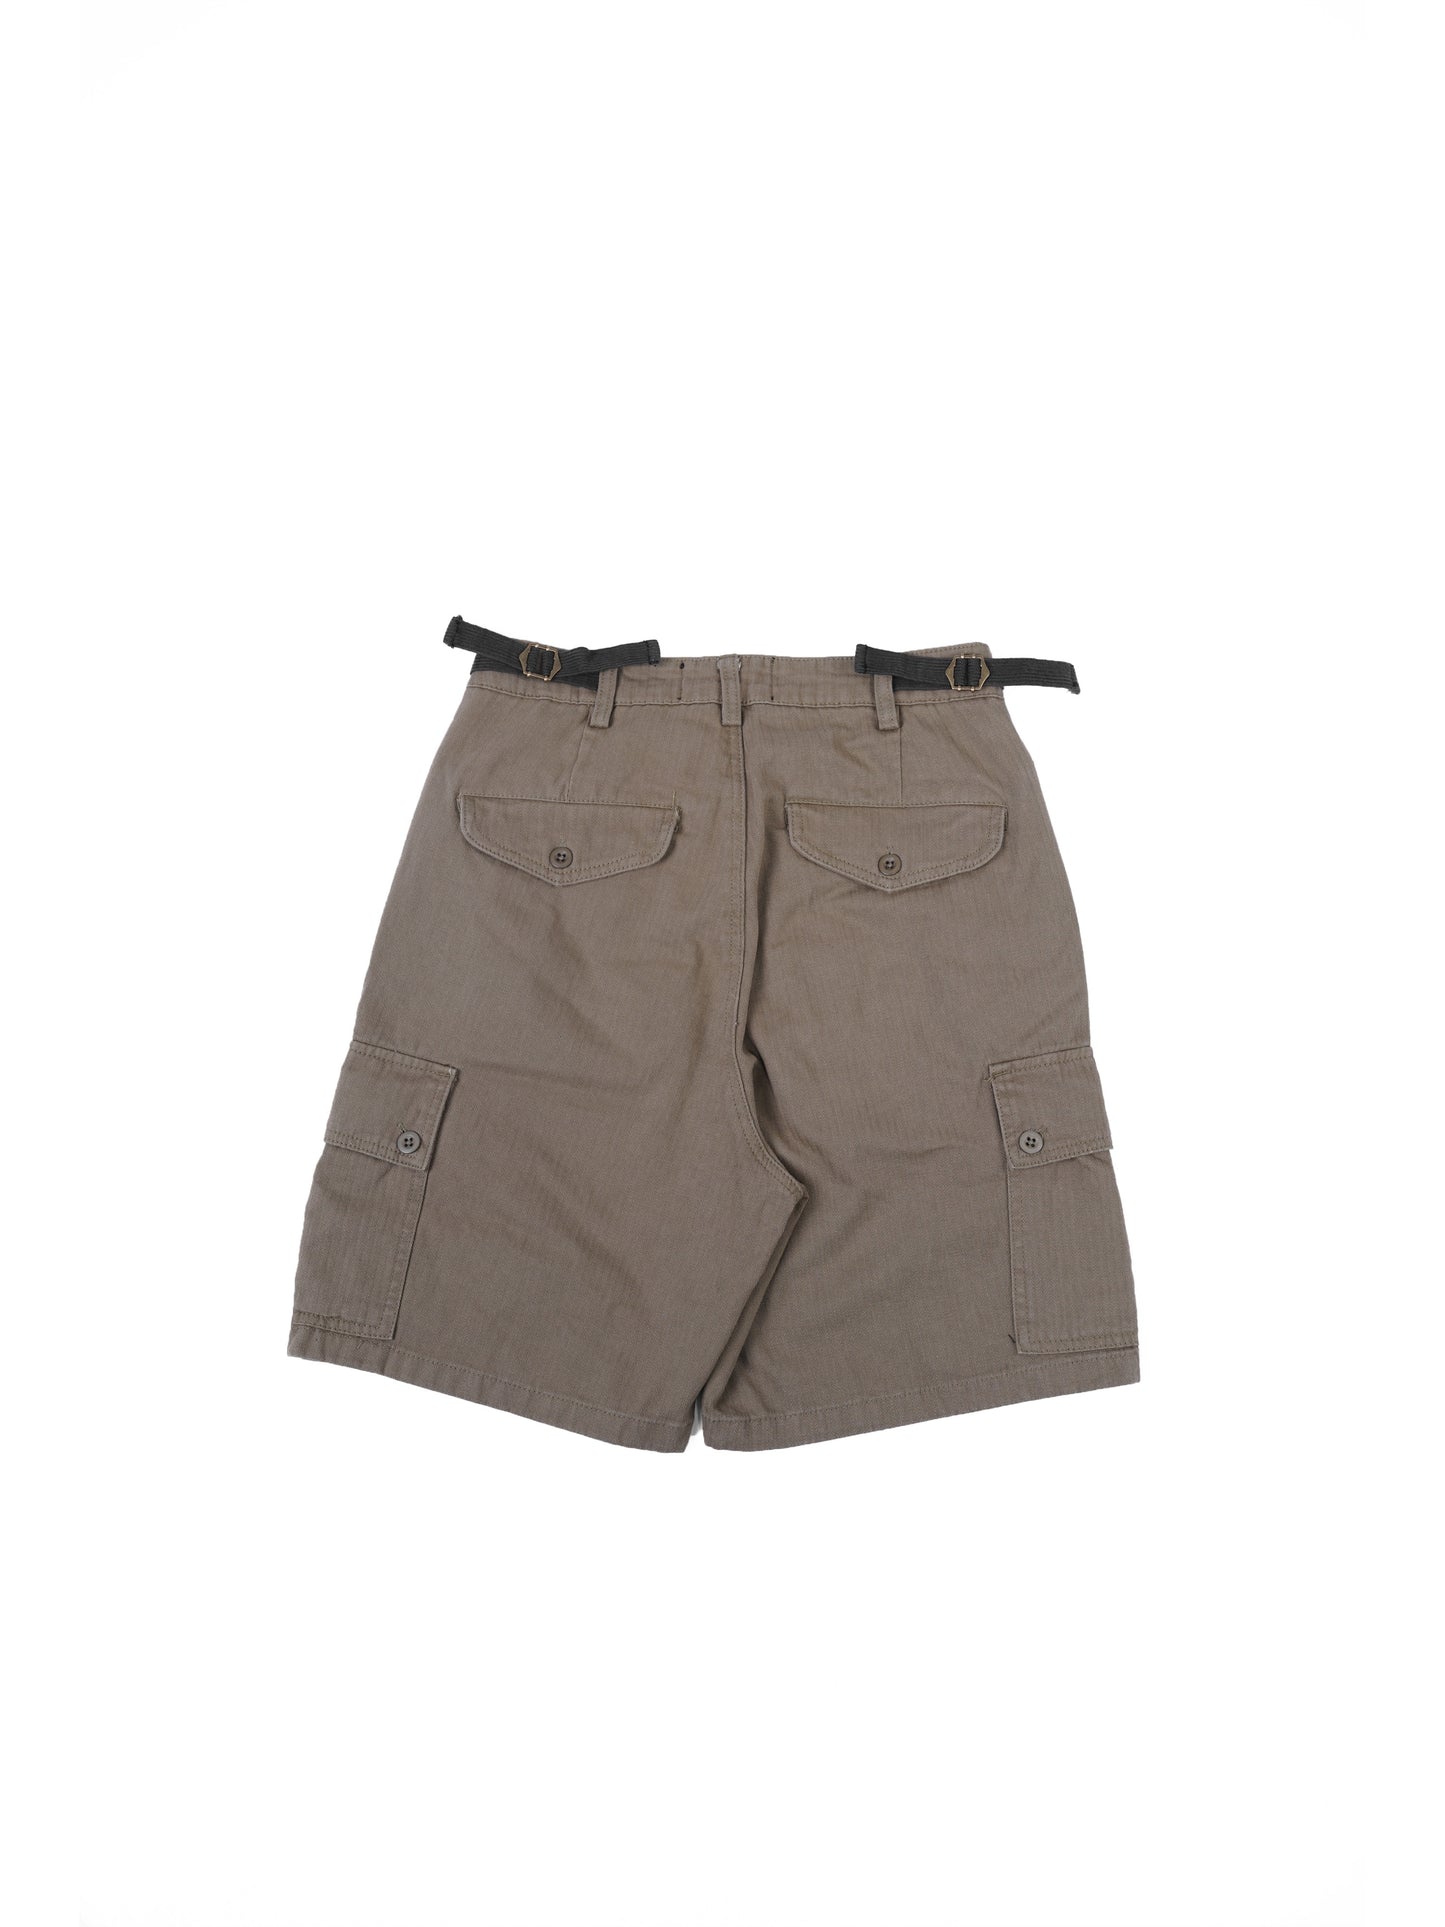 HBT04 Army Shorts 人字紋軍裝短褲